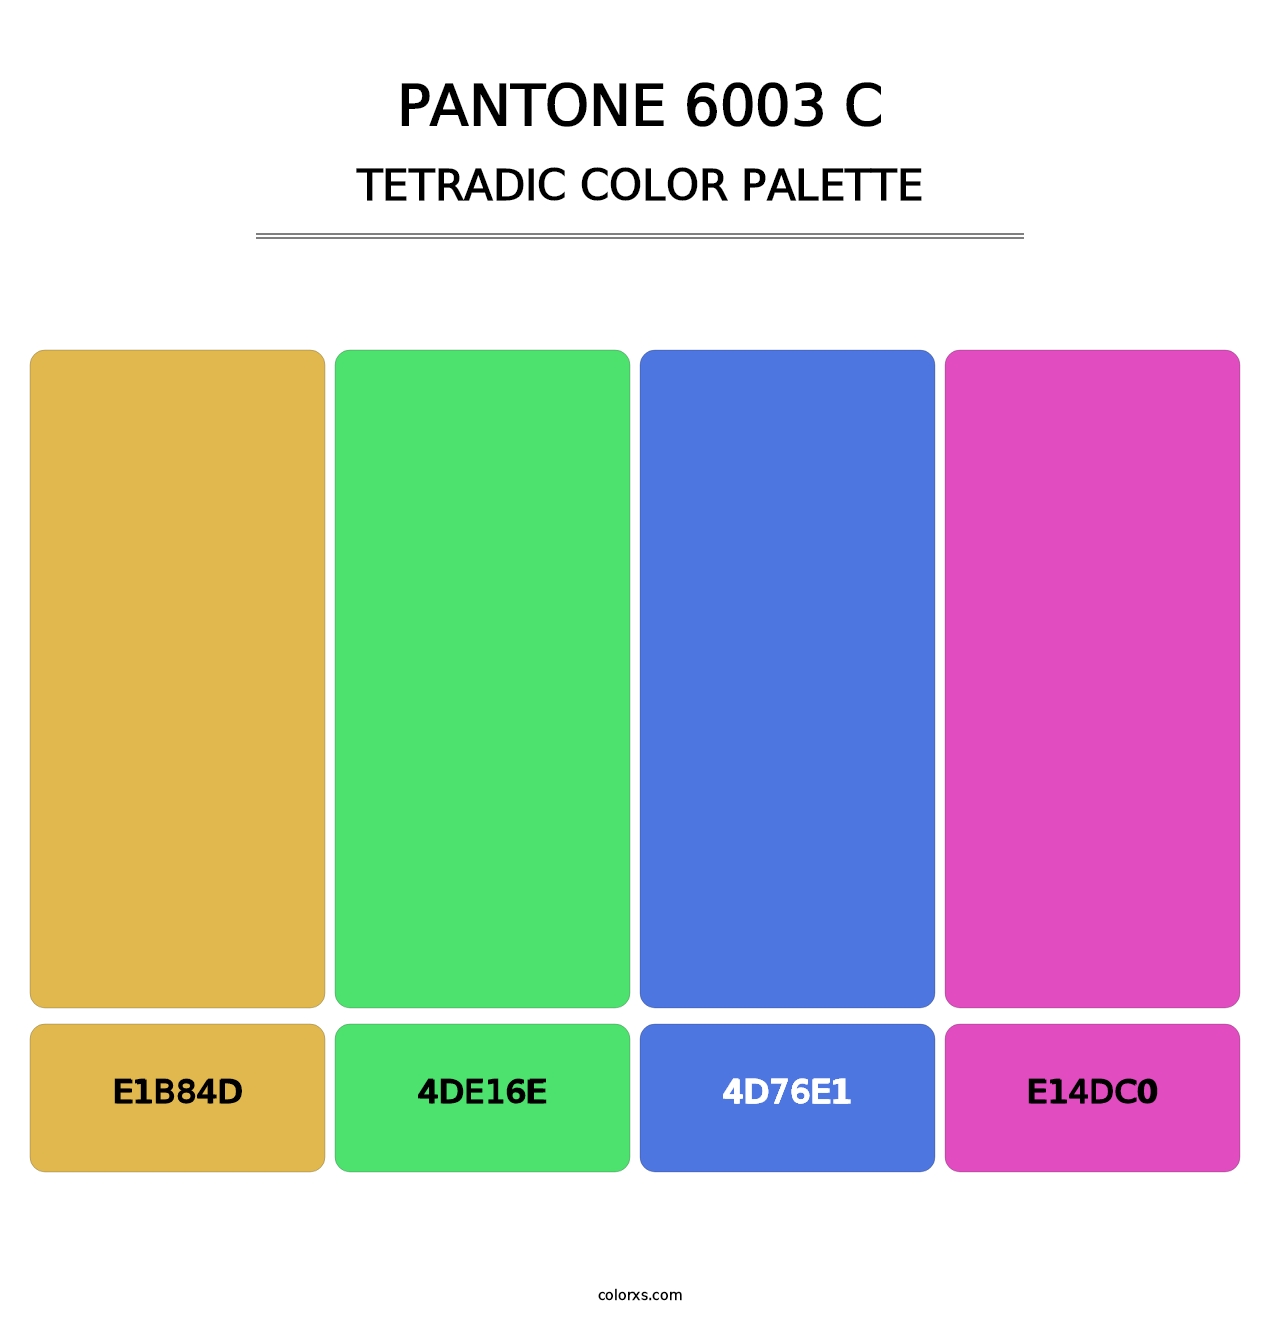 PANTONE 6003 C - Tetradic Color Palette